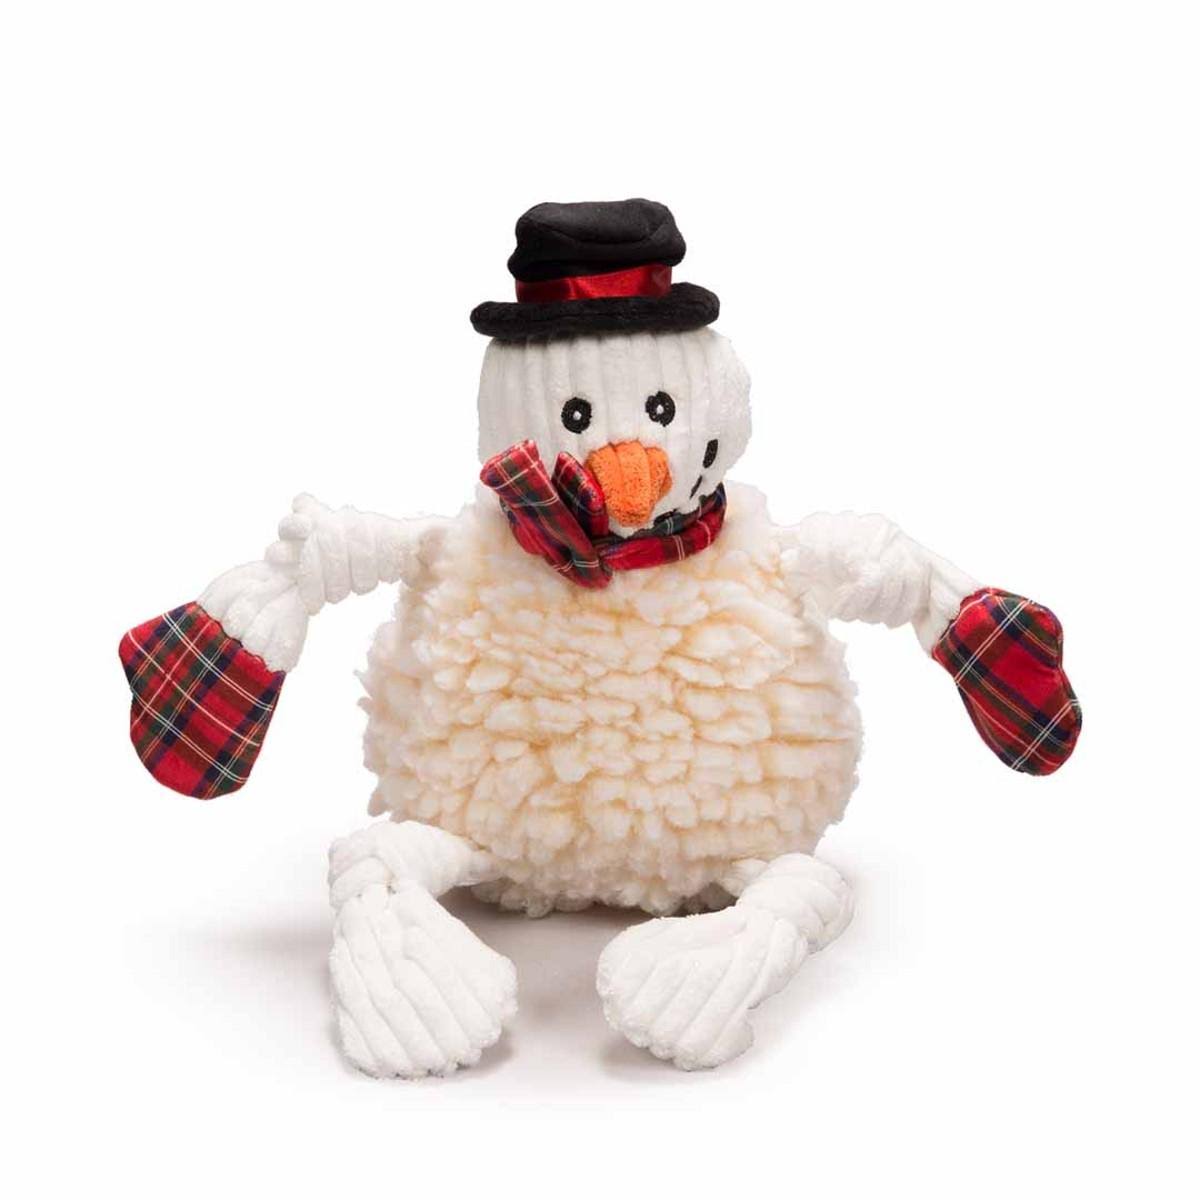 HuggleHounds McSnowy The Snowman FlufferKnottie Dog Toy, Wee